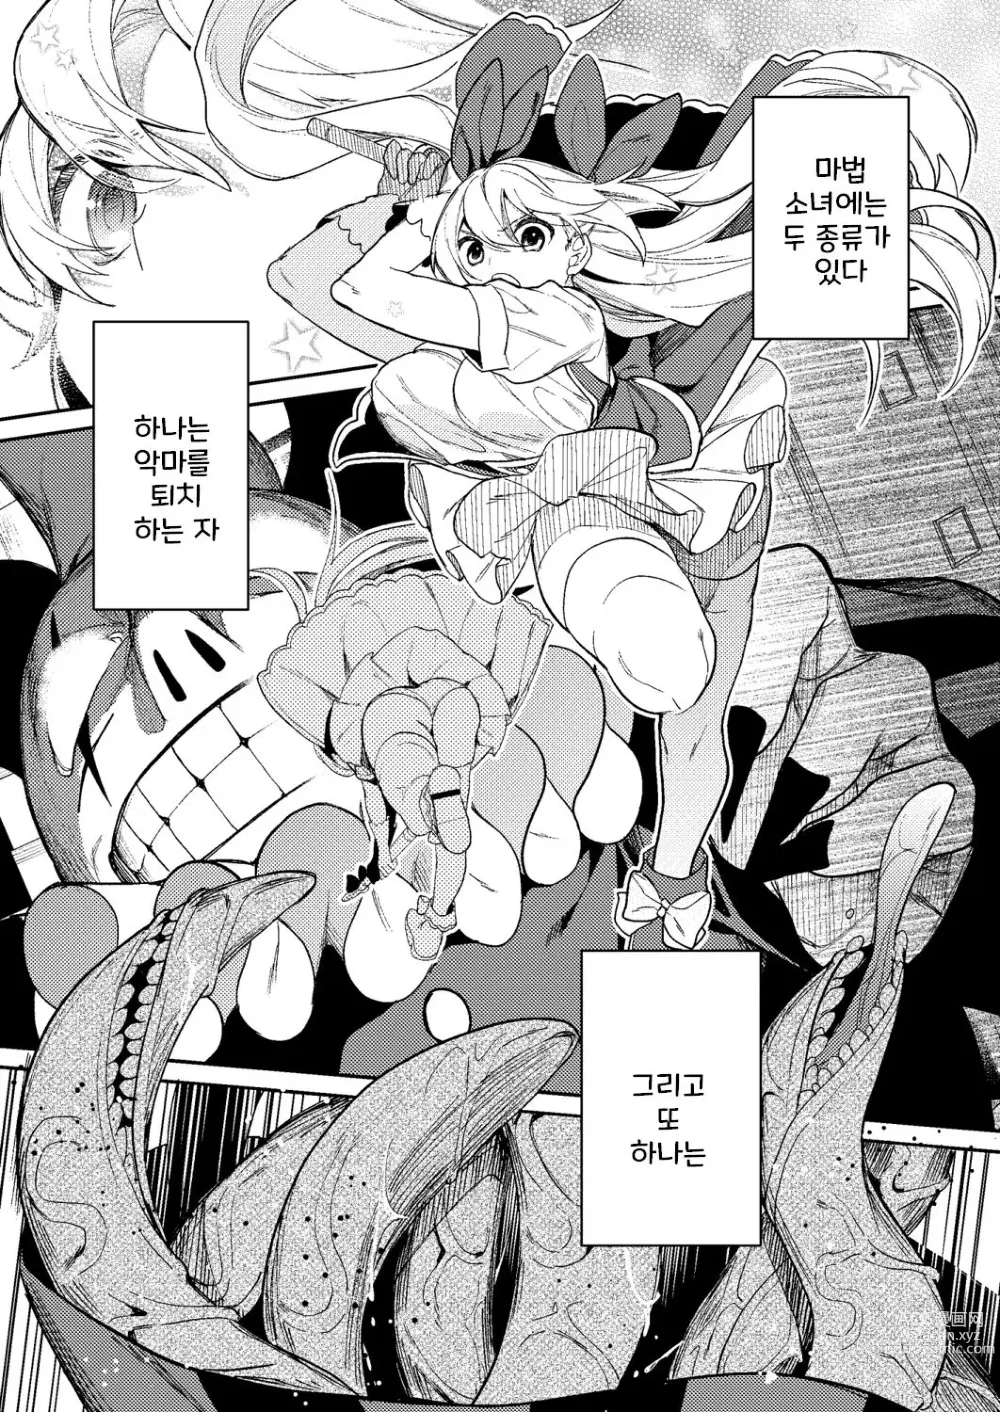 Page 1 of doujinshi ドMな魔法少女が触手に色々される話